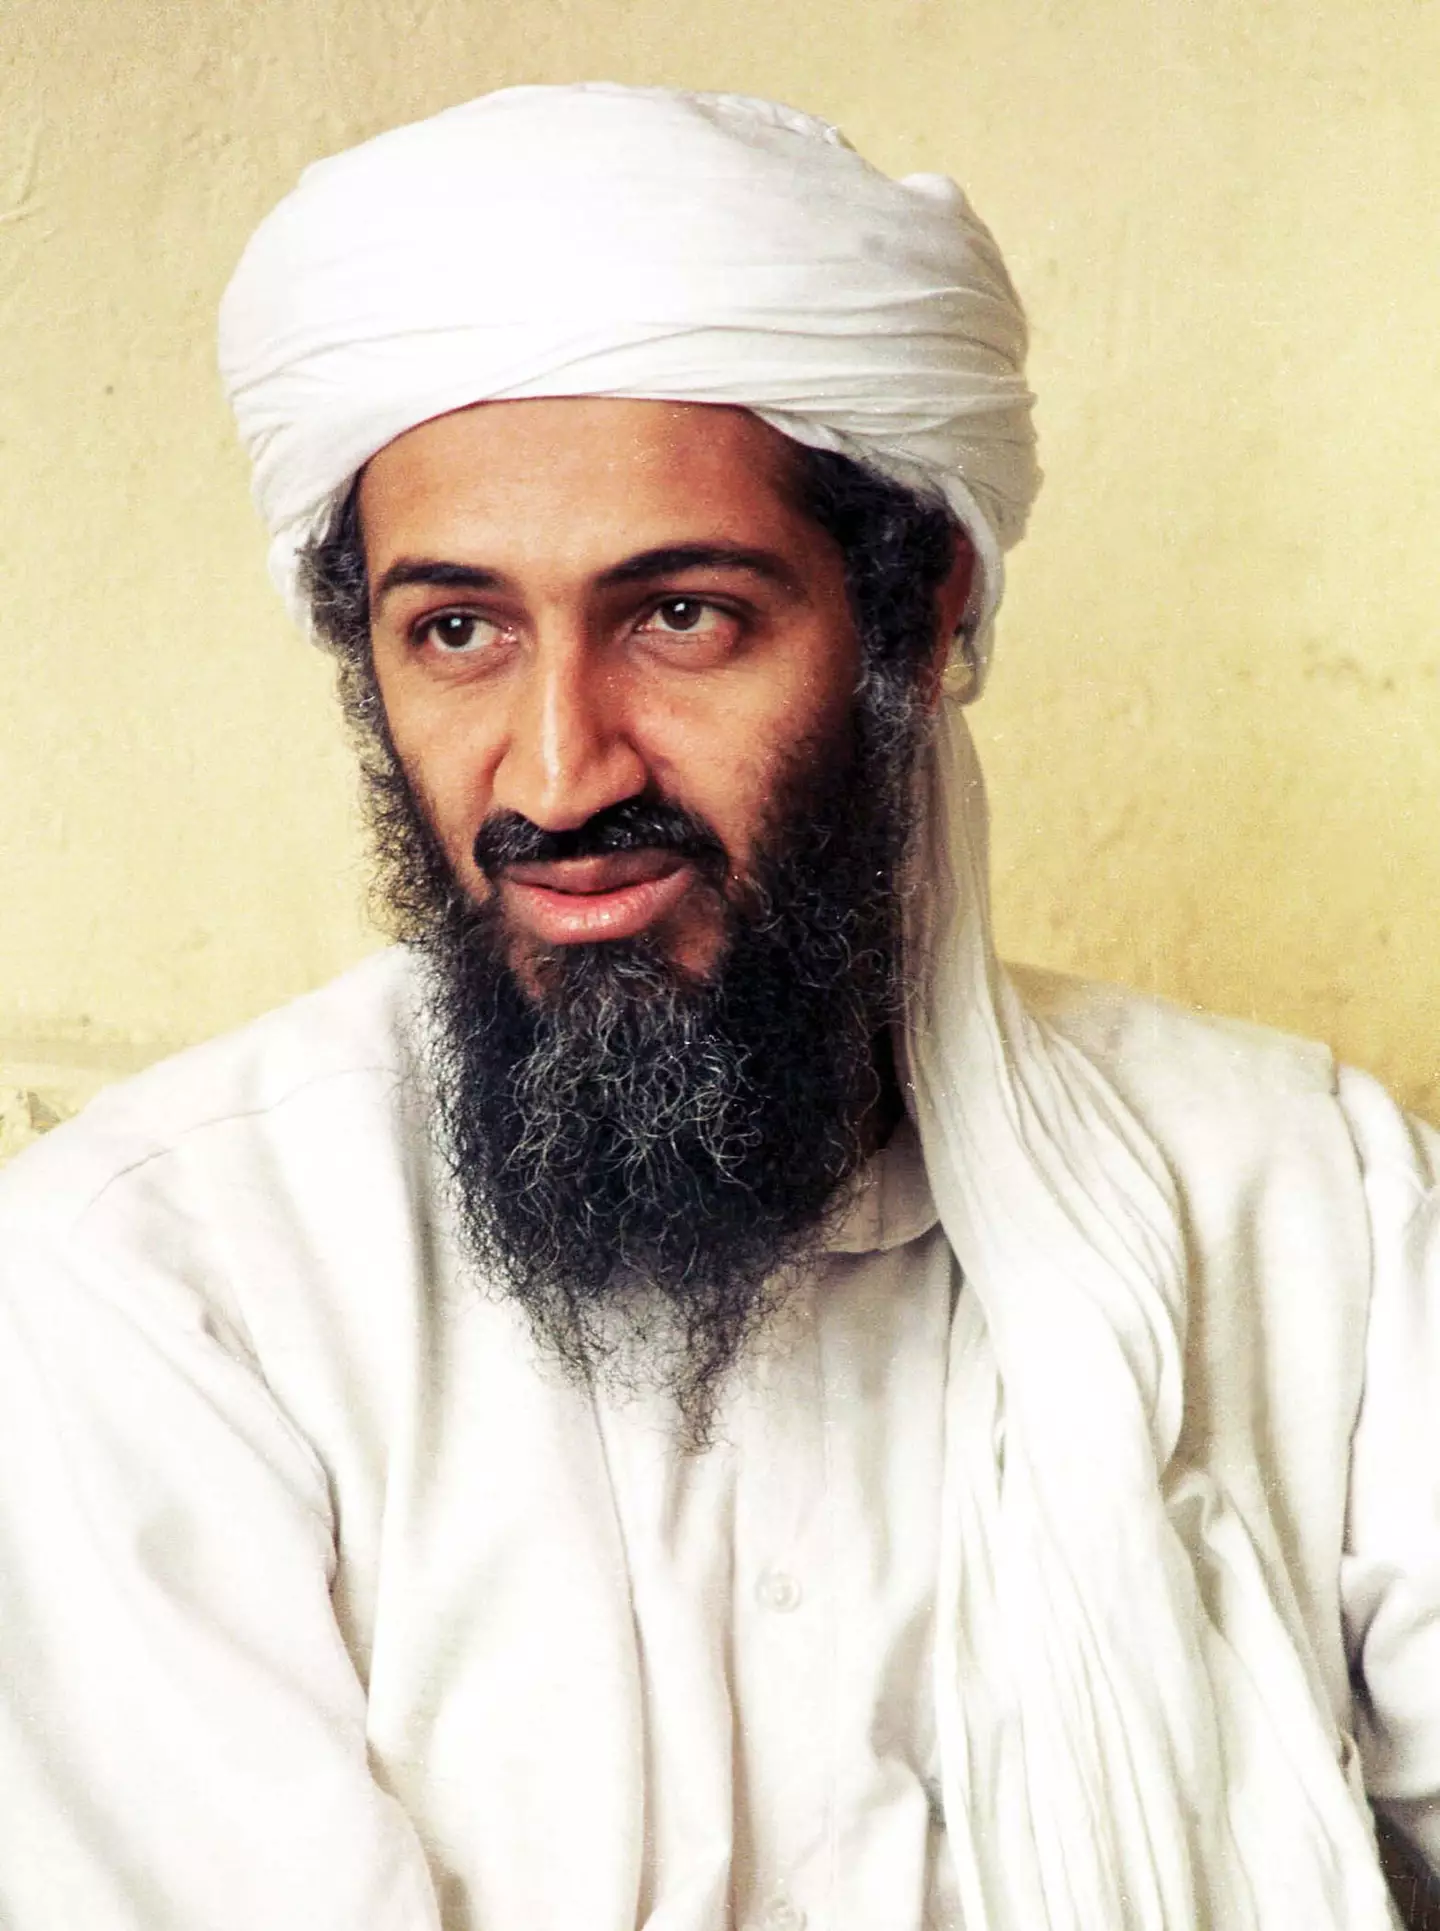 Bin Laden was killed by Navy SEALS.